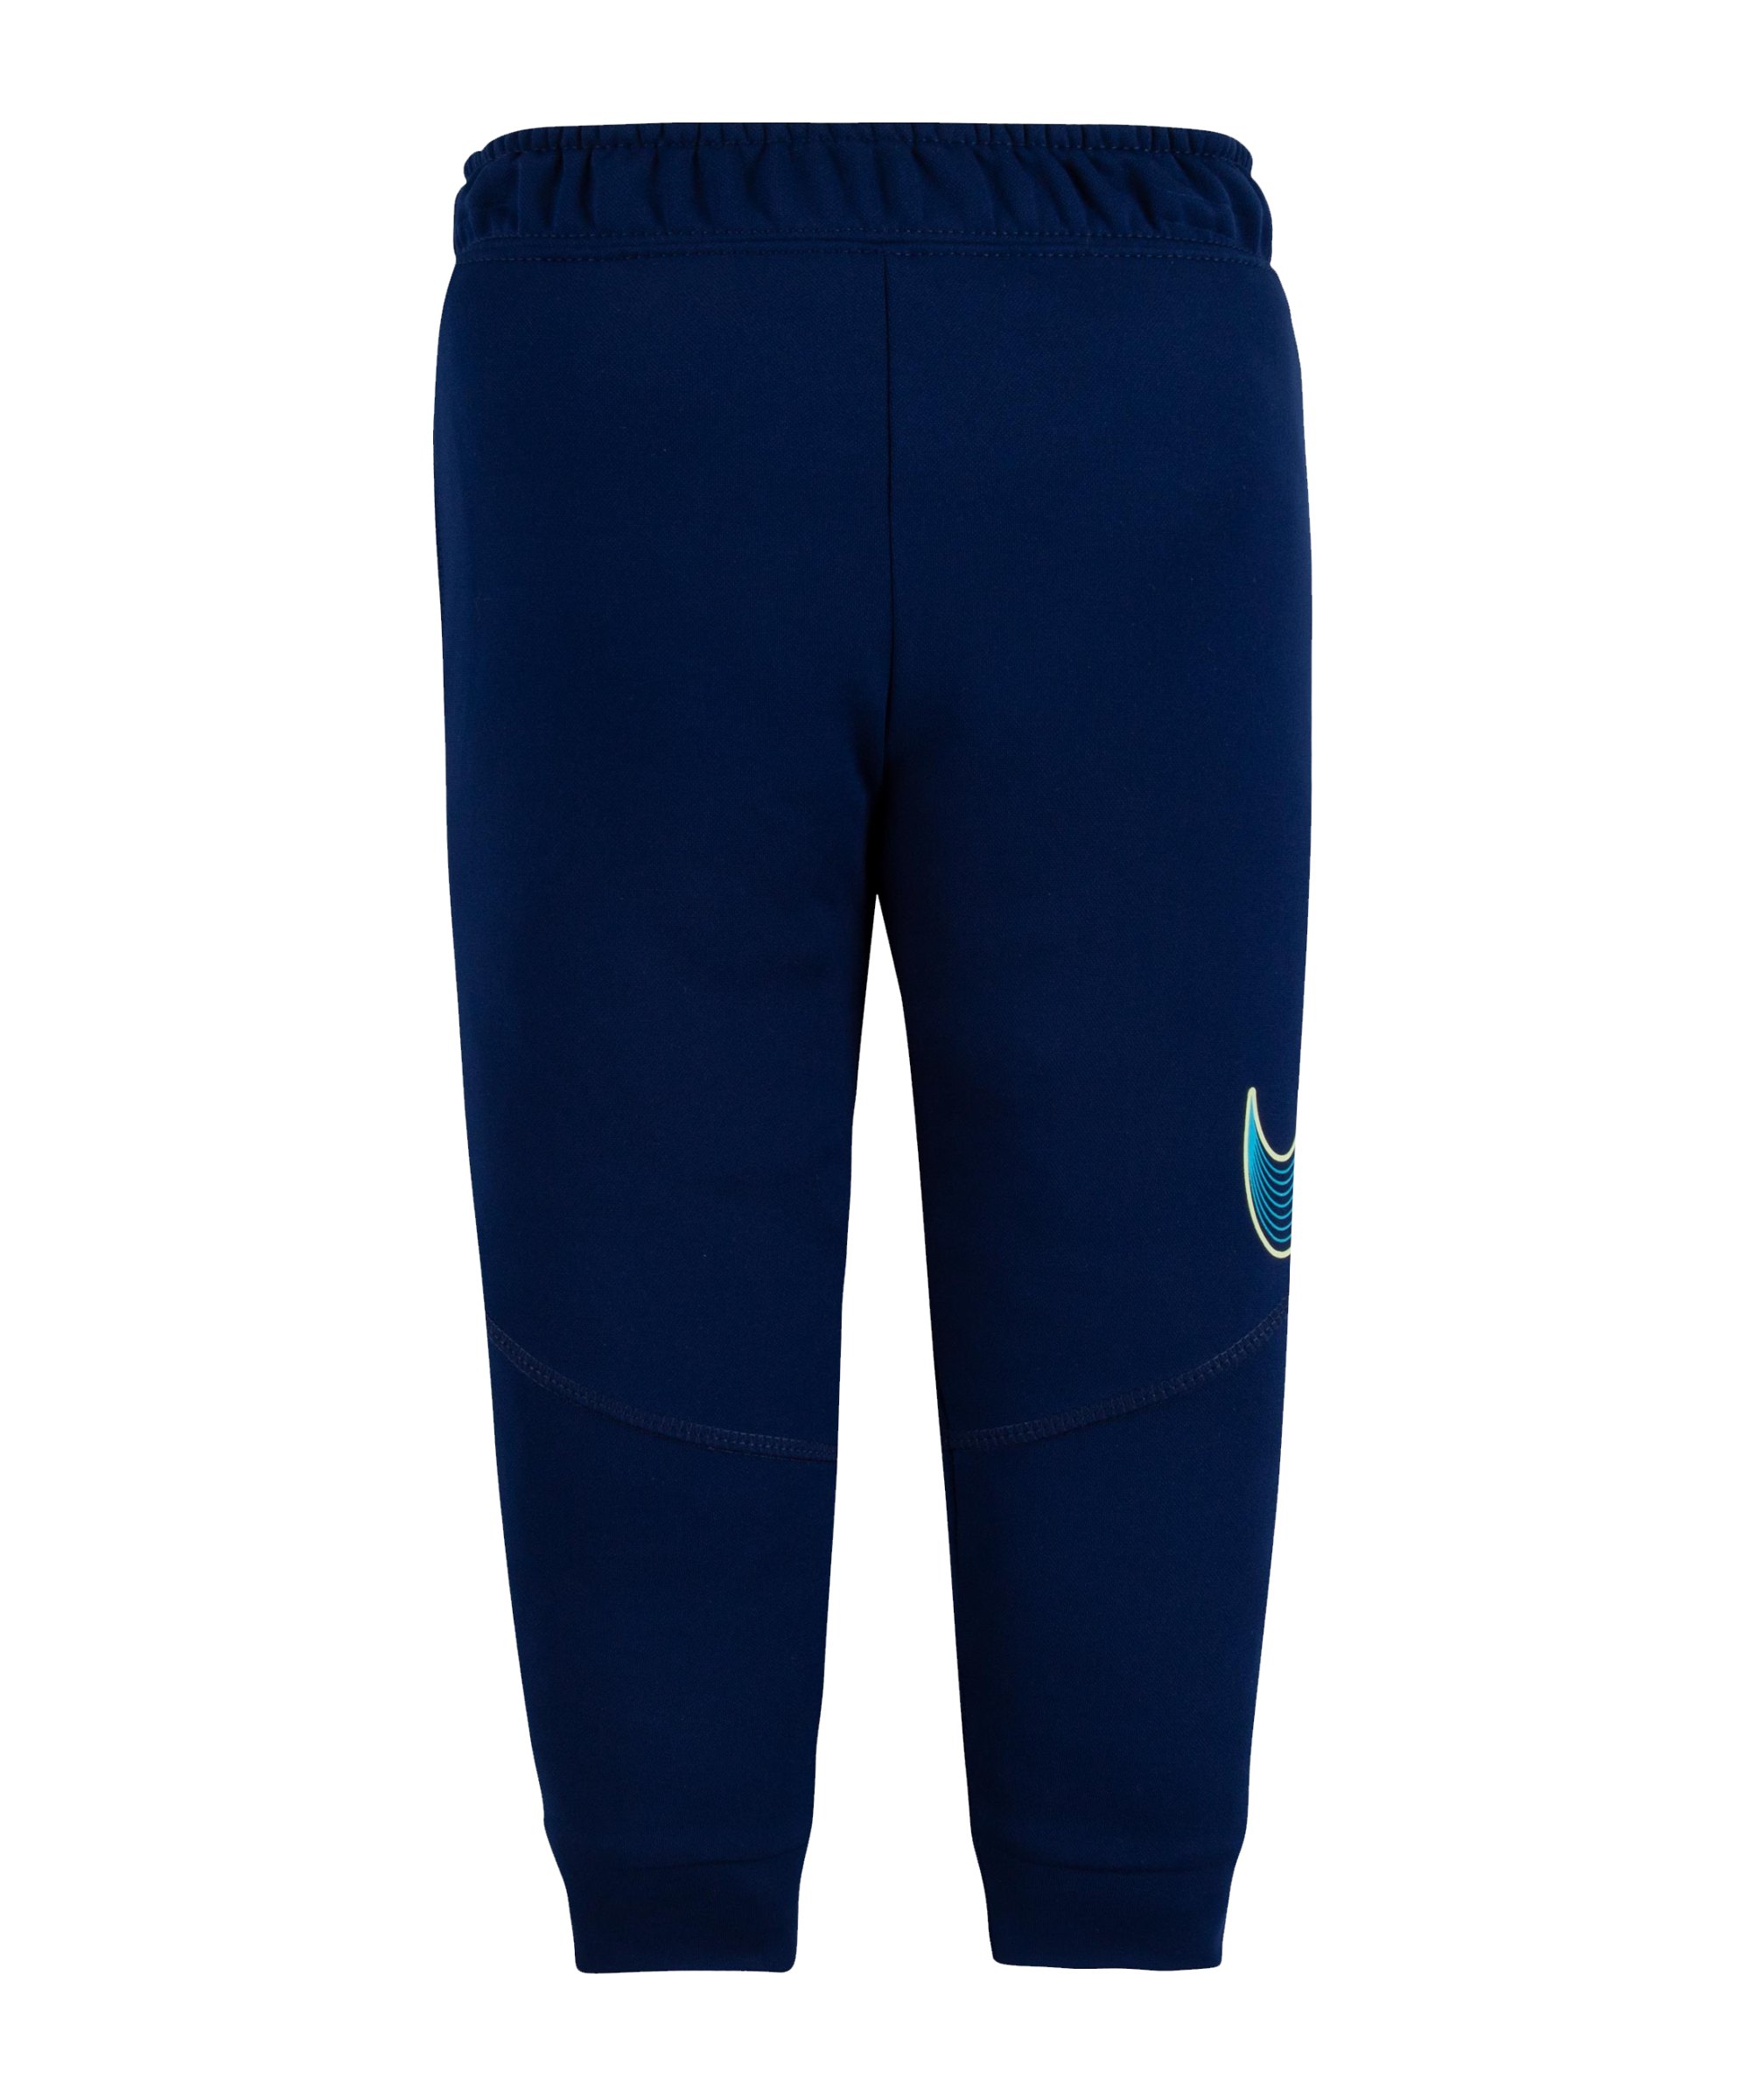 Nike Therma Jogginghose Kids Blau FU9J - blau